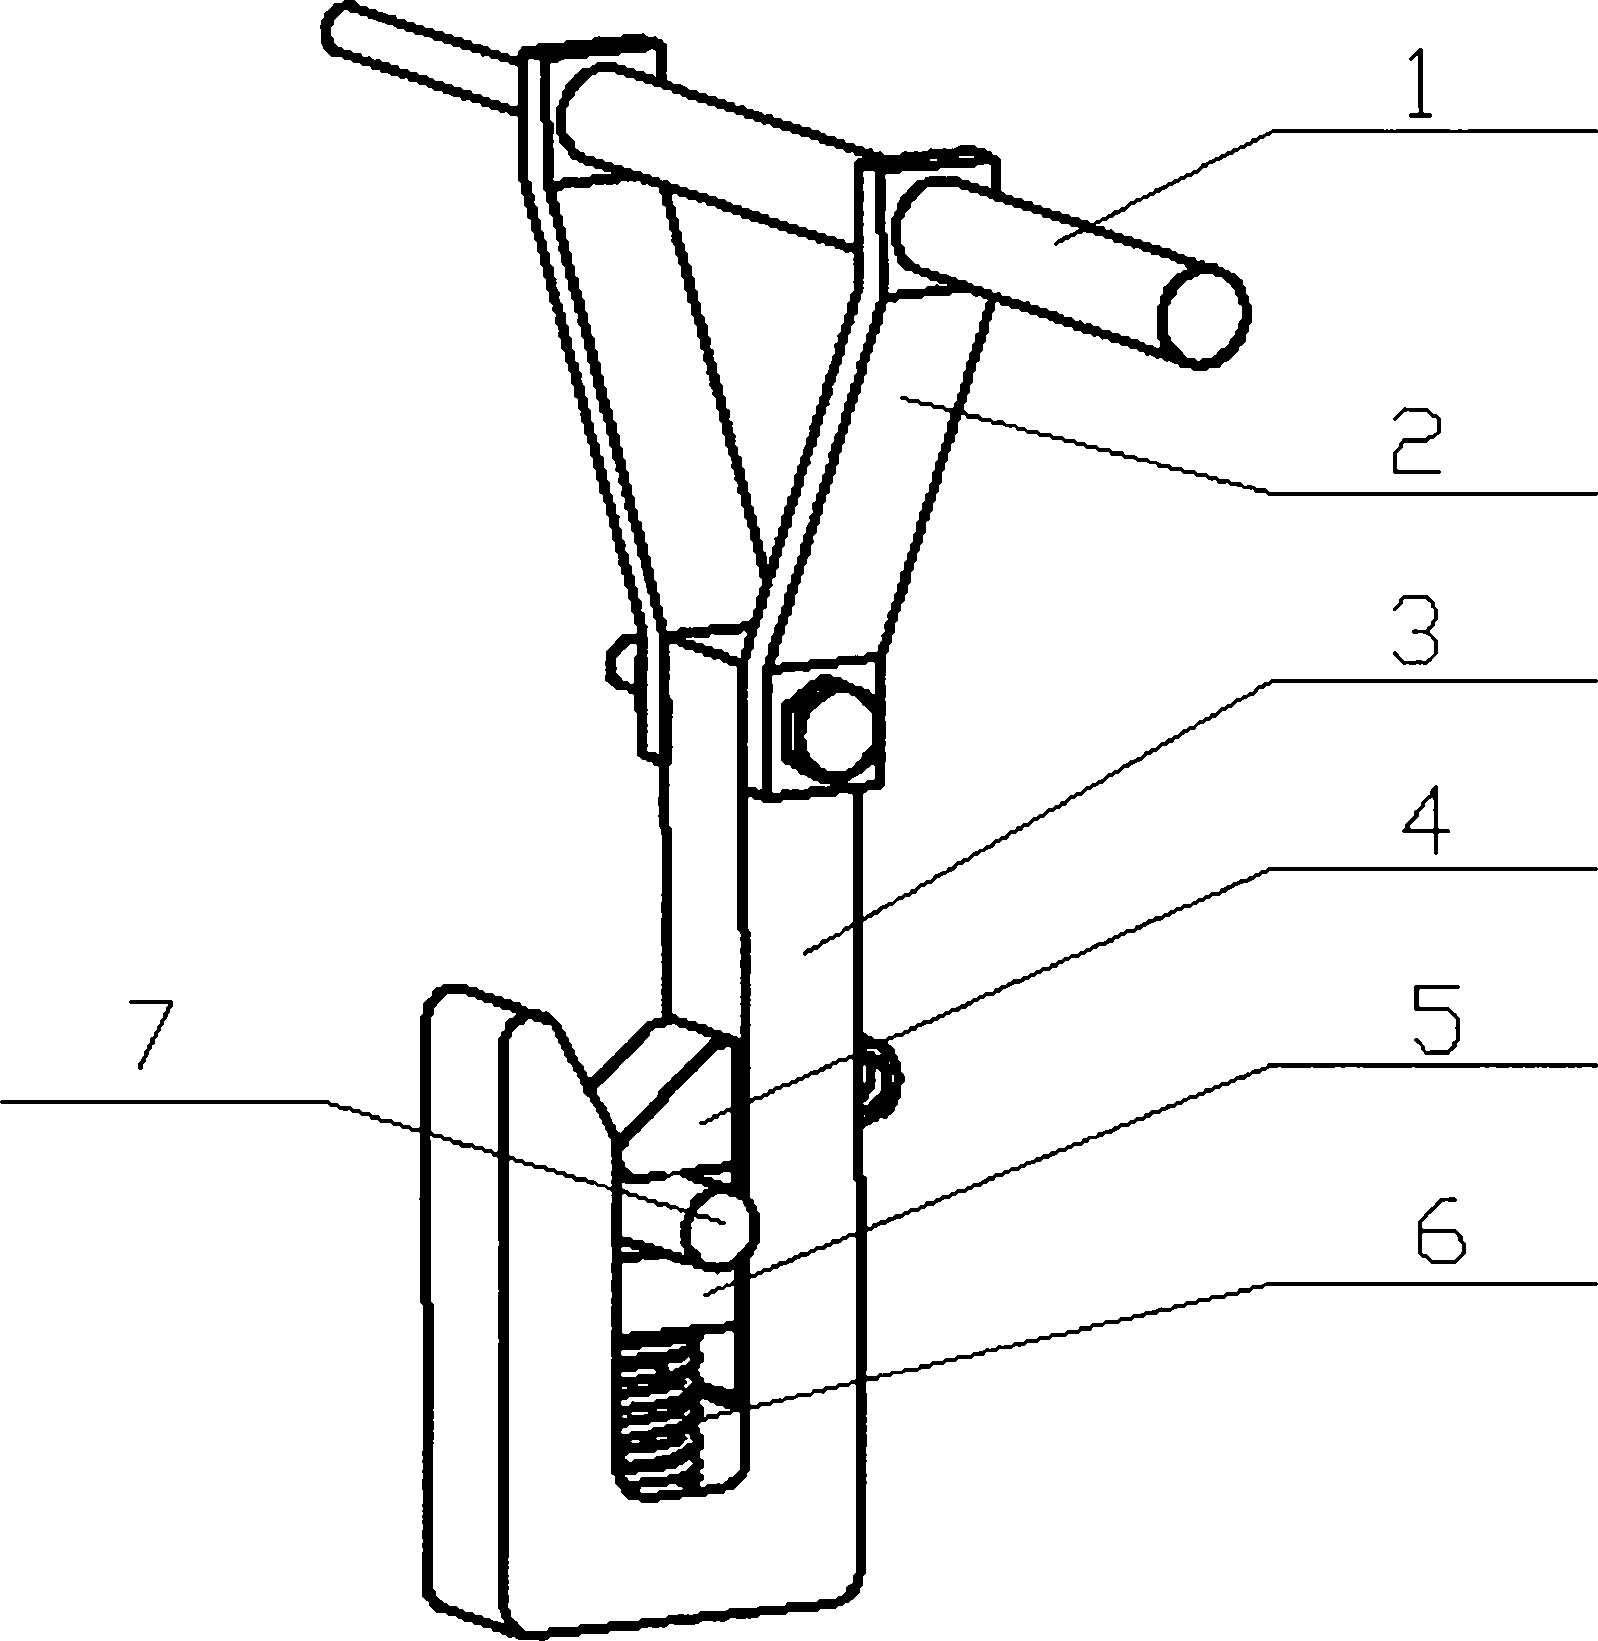 Pull-tab-shaped bayonet lock self-locking type lead end grounding clamp